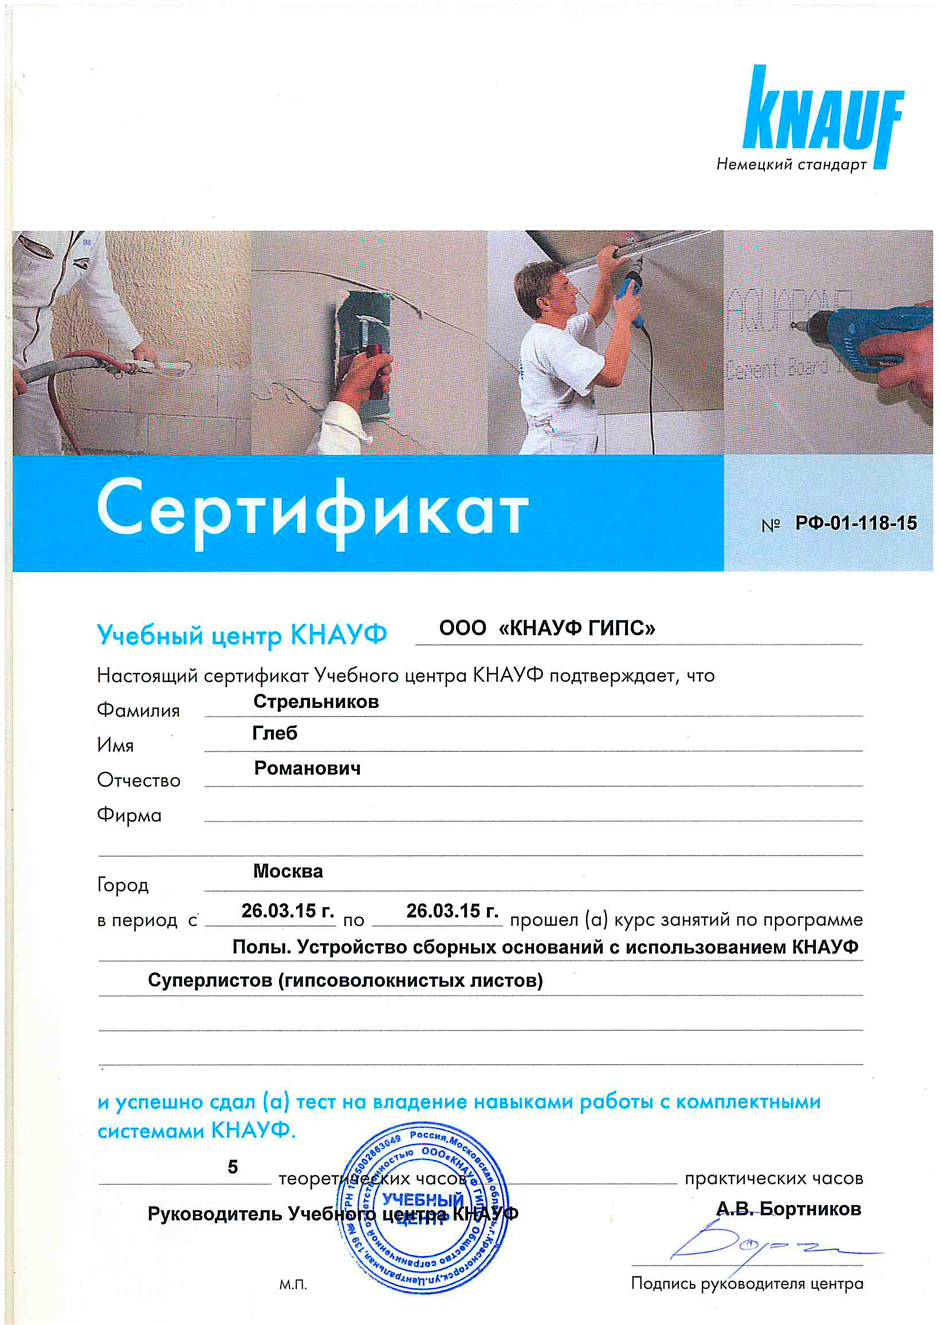 Knauf сертификат